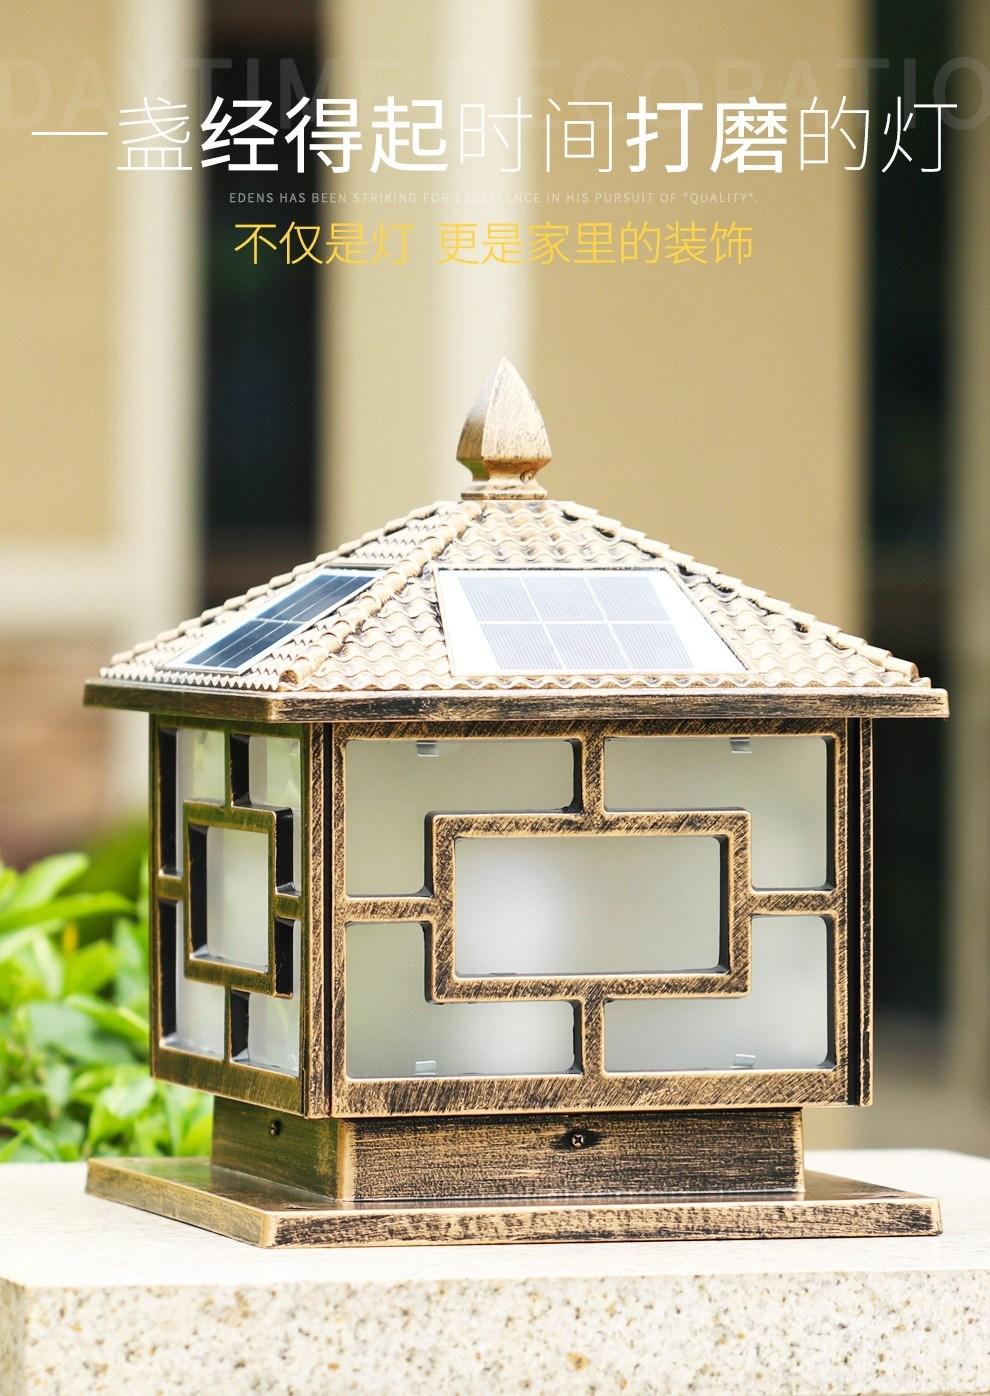 Outdoor LED Lighting Waterproof Courtyard Light Garden Fence Gate Pillar Chinese Style Decor Wall Lamp